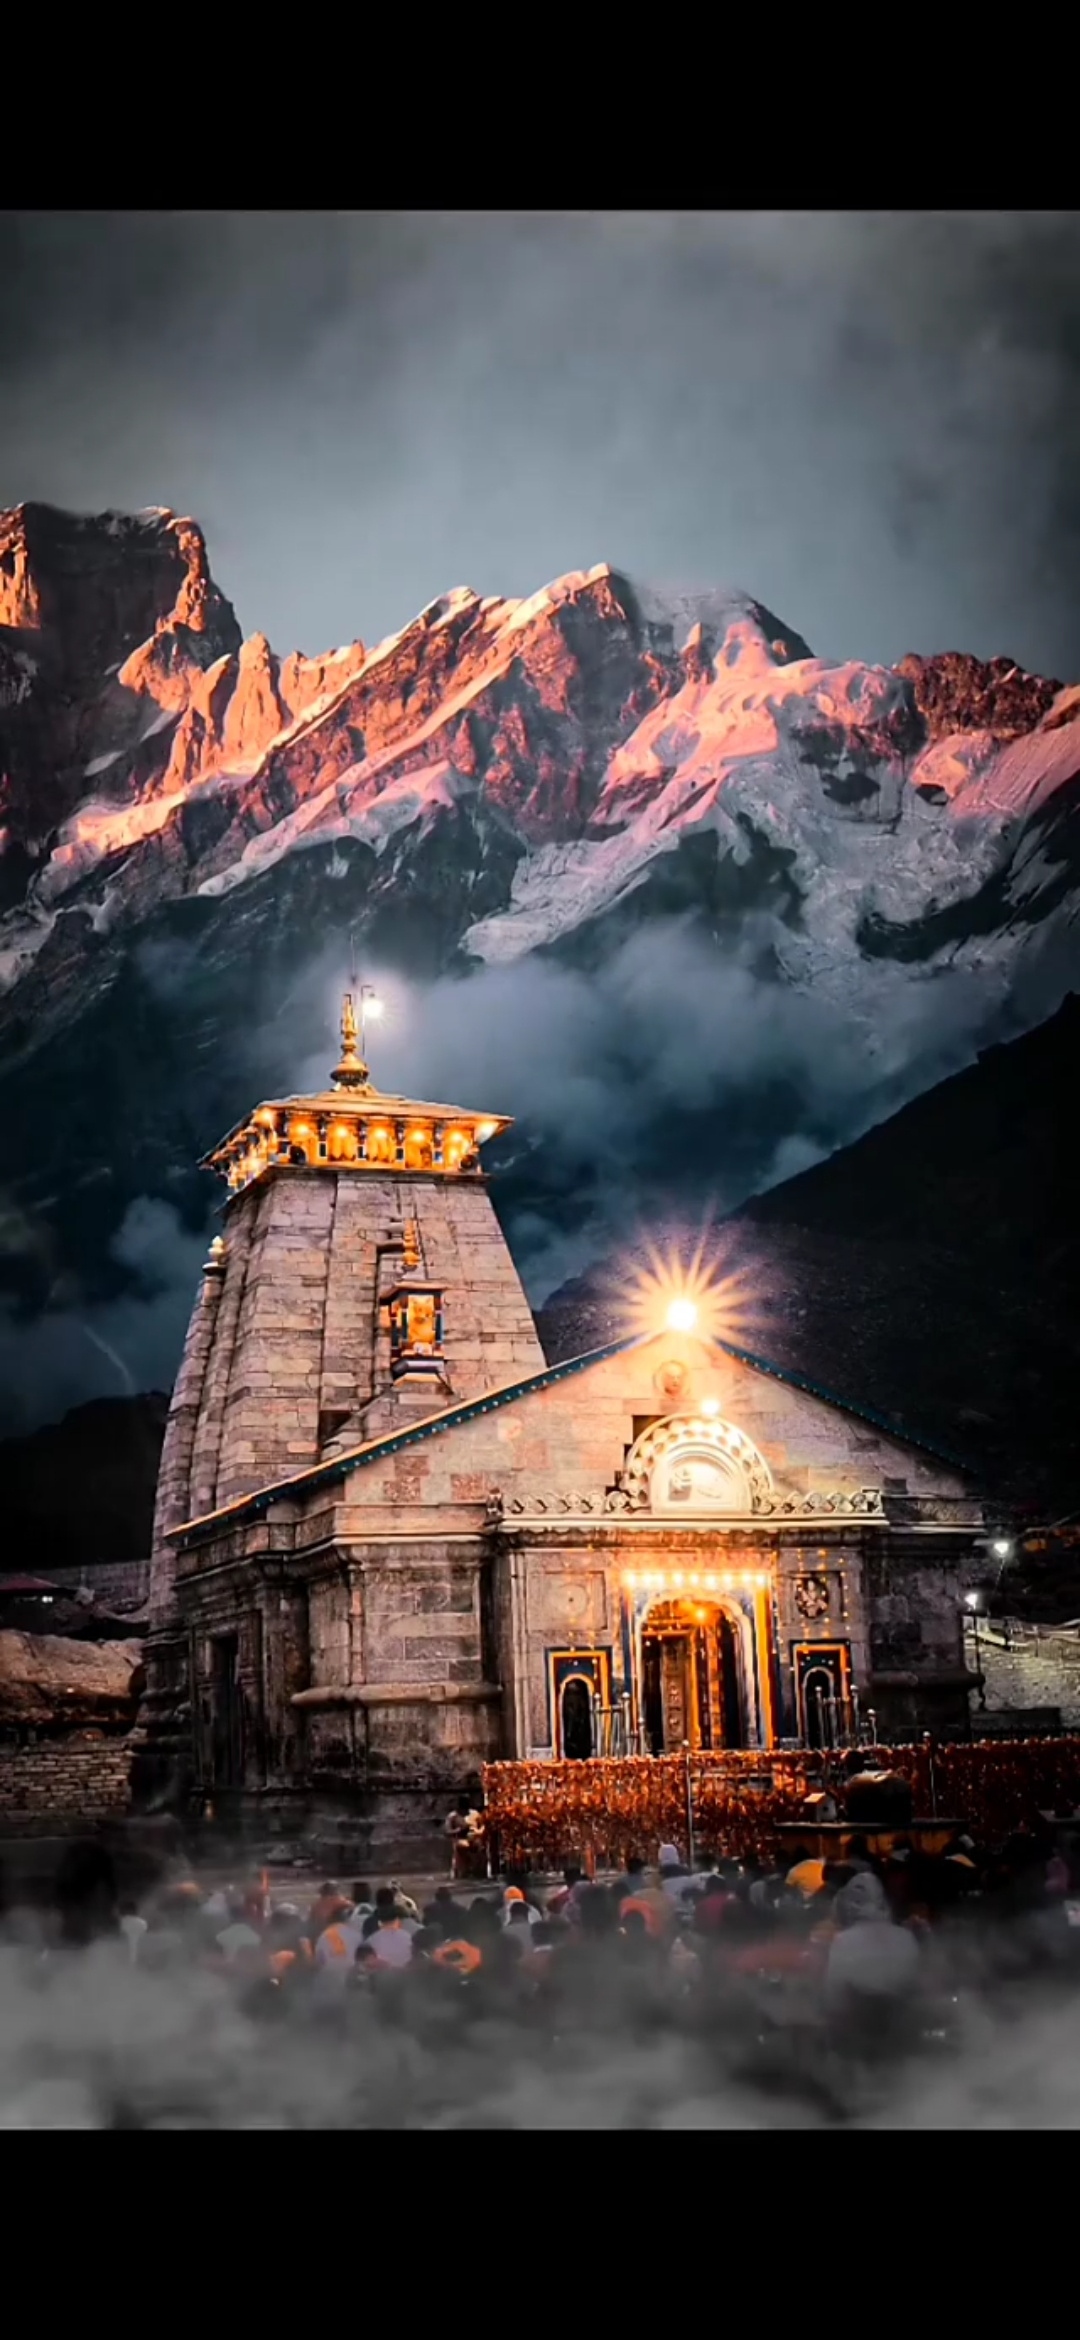 Kedarnath Mandir - night view